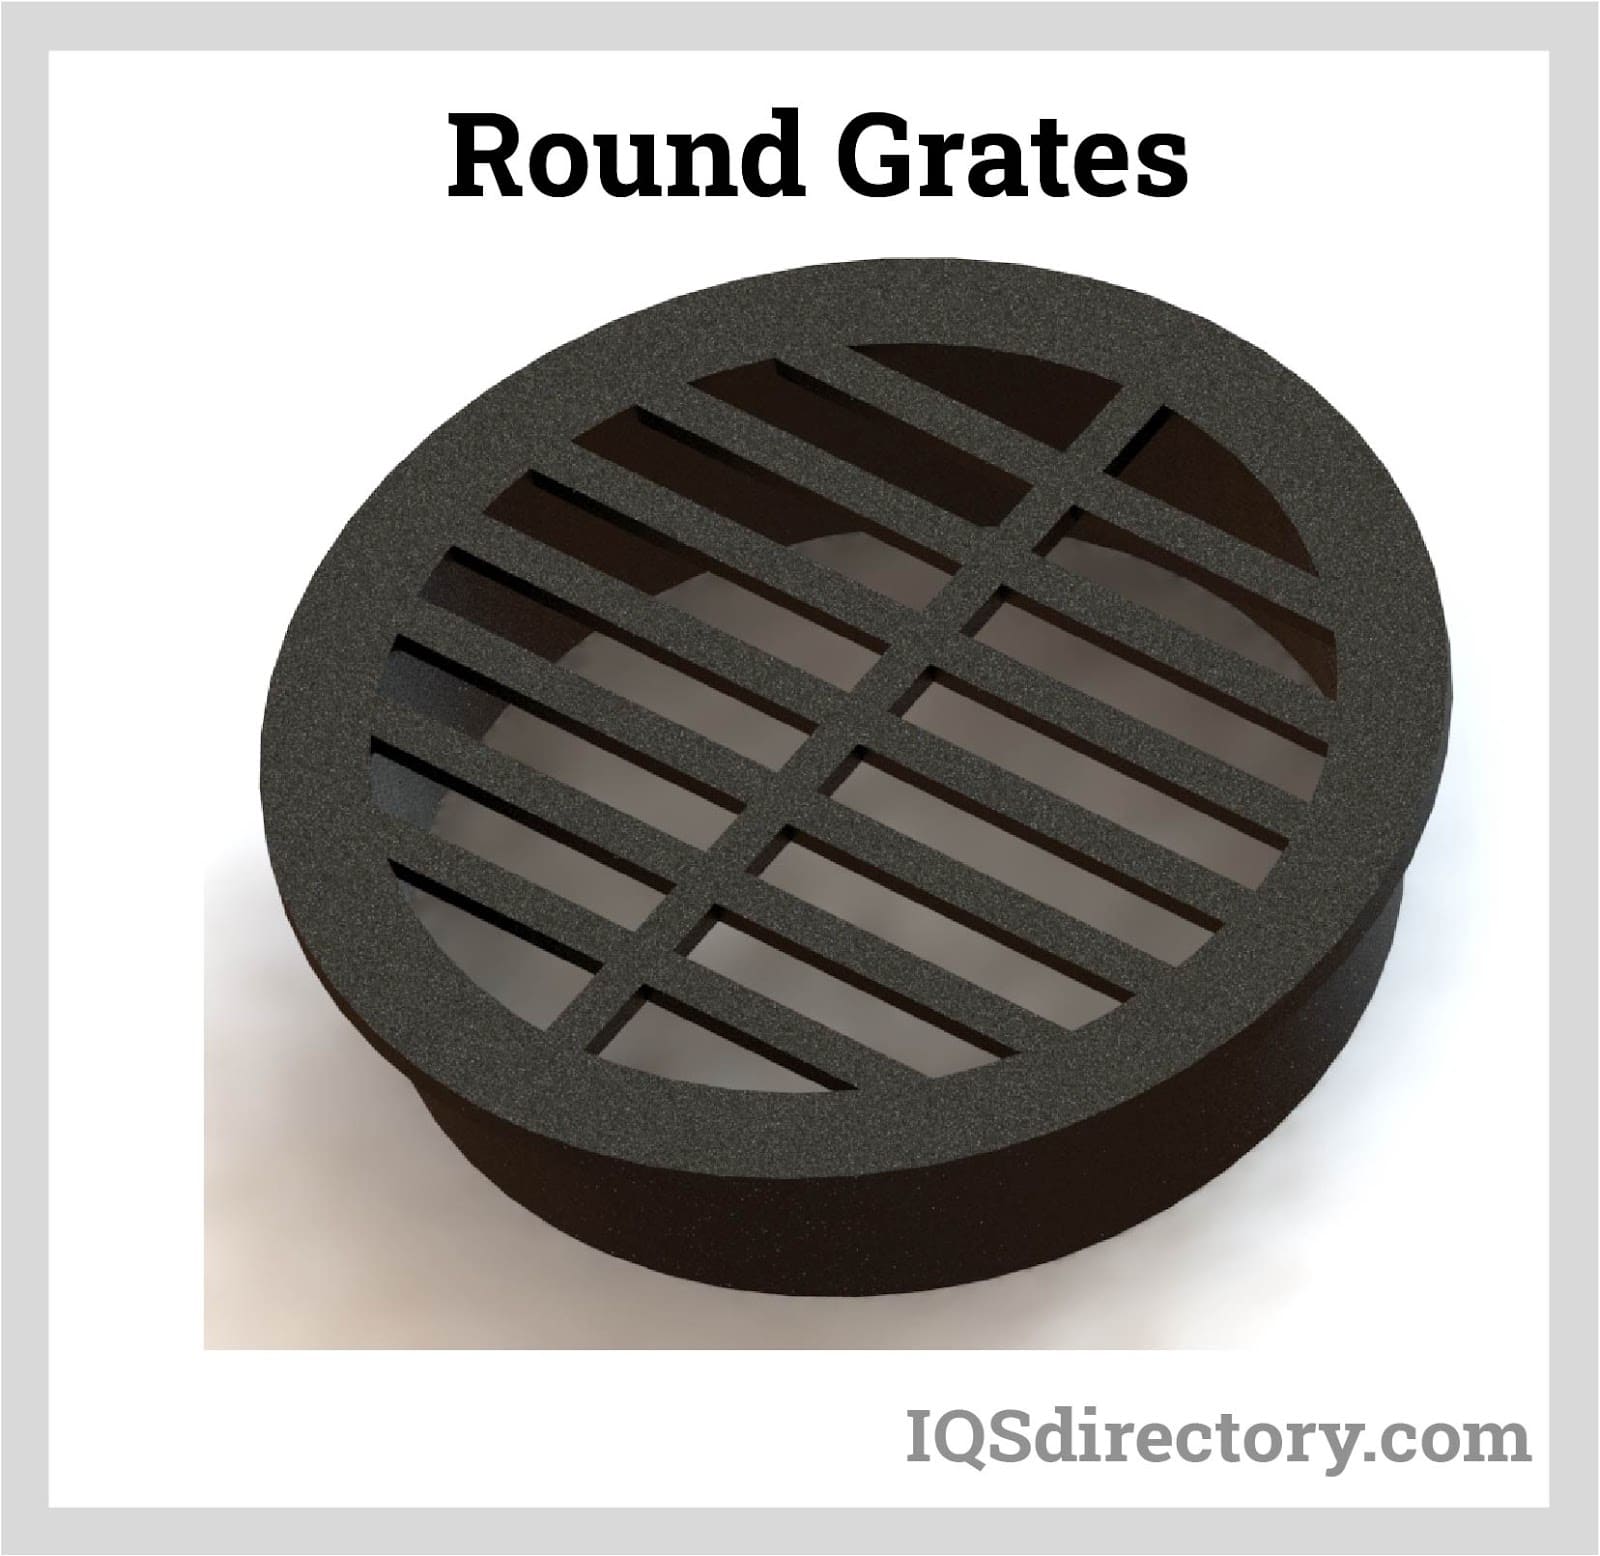 Round Grates